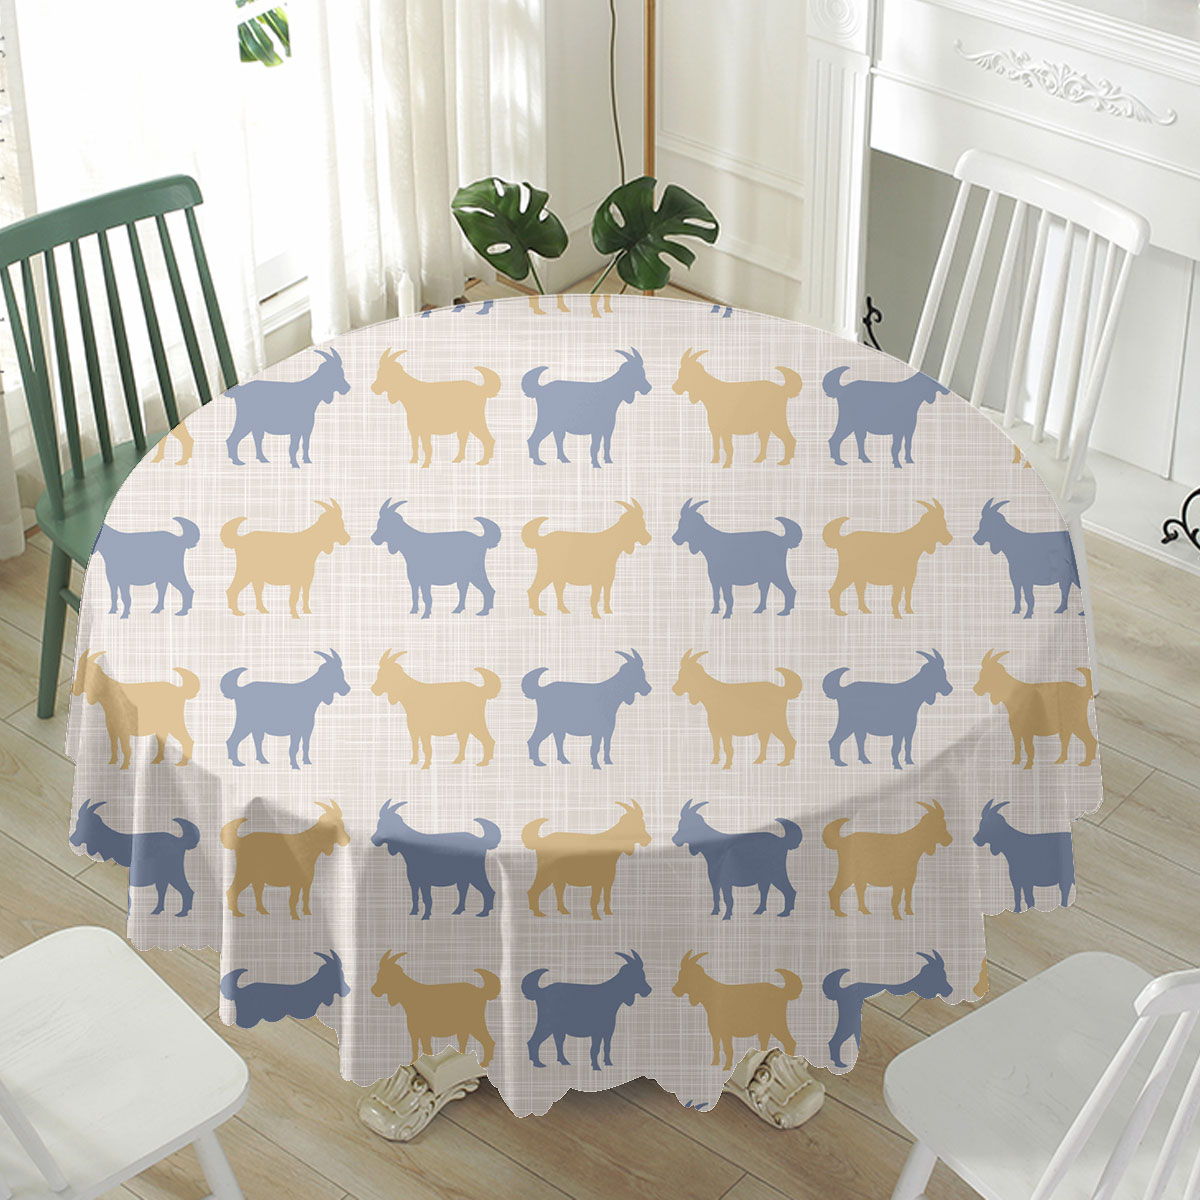 Goat Silhouette Pattern Waterproof Tablecloth